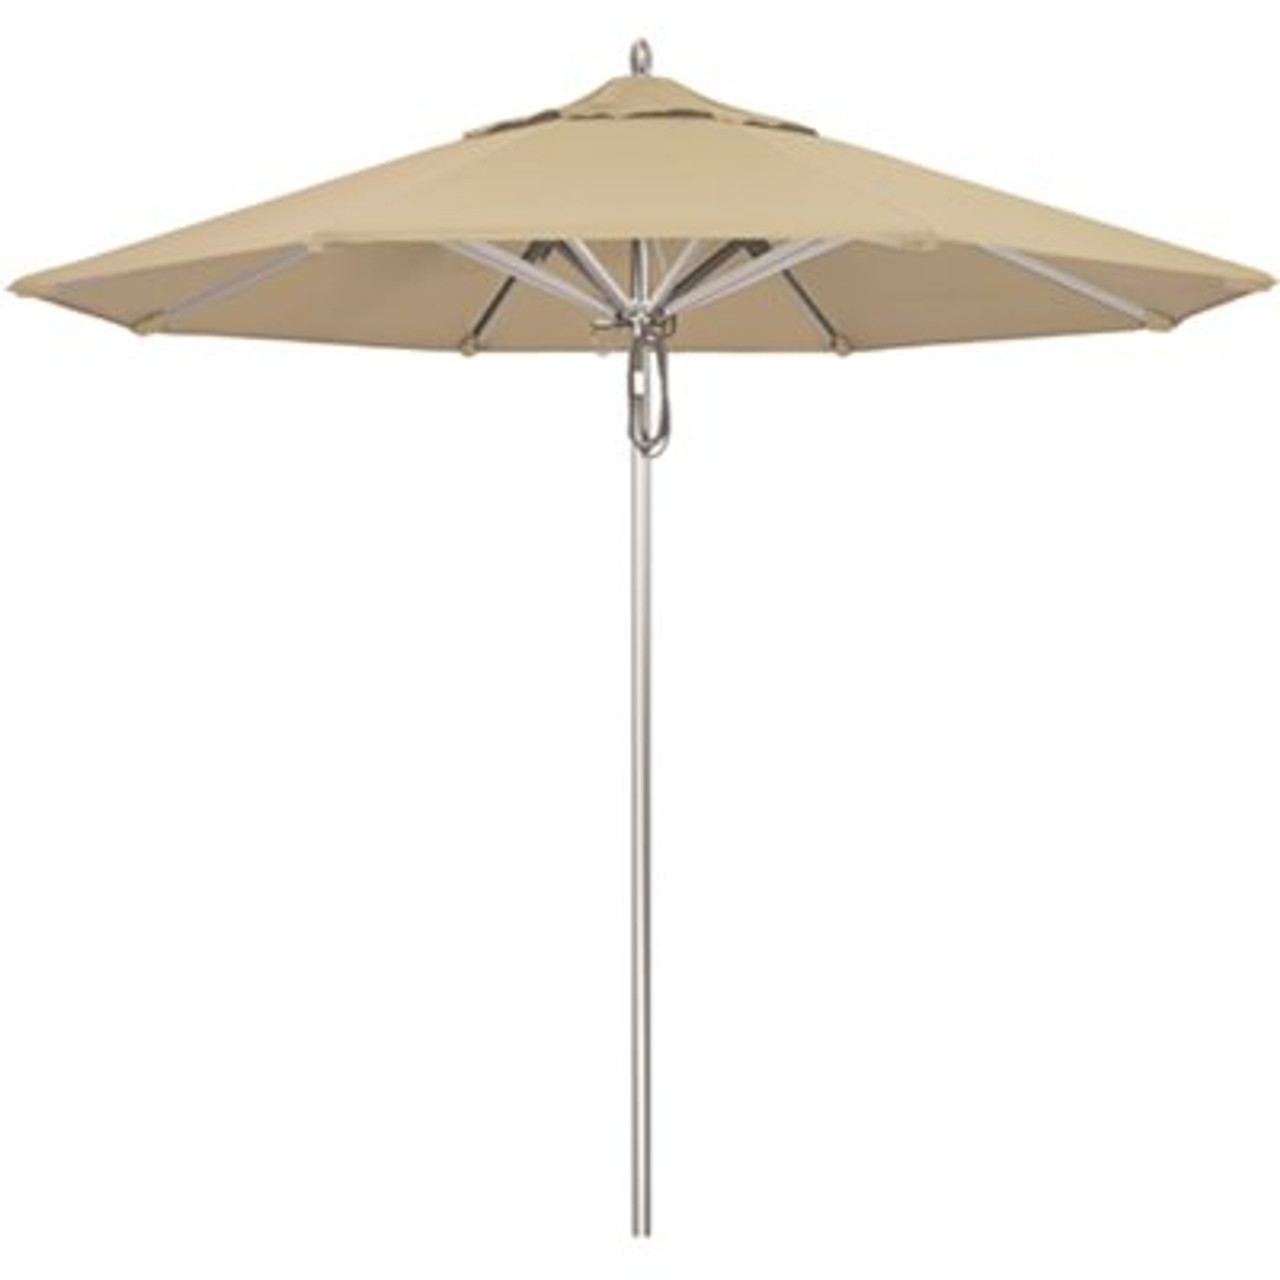 California Umbrella 9 ft. Silver Aluminum Commercial Market Patio Umbrella with Pulley Lift in Antique Beige Sunbrella